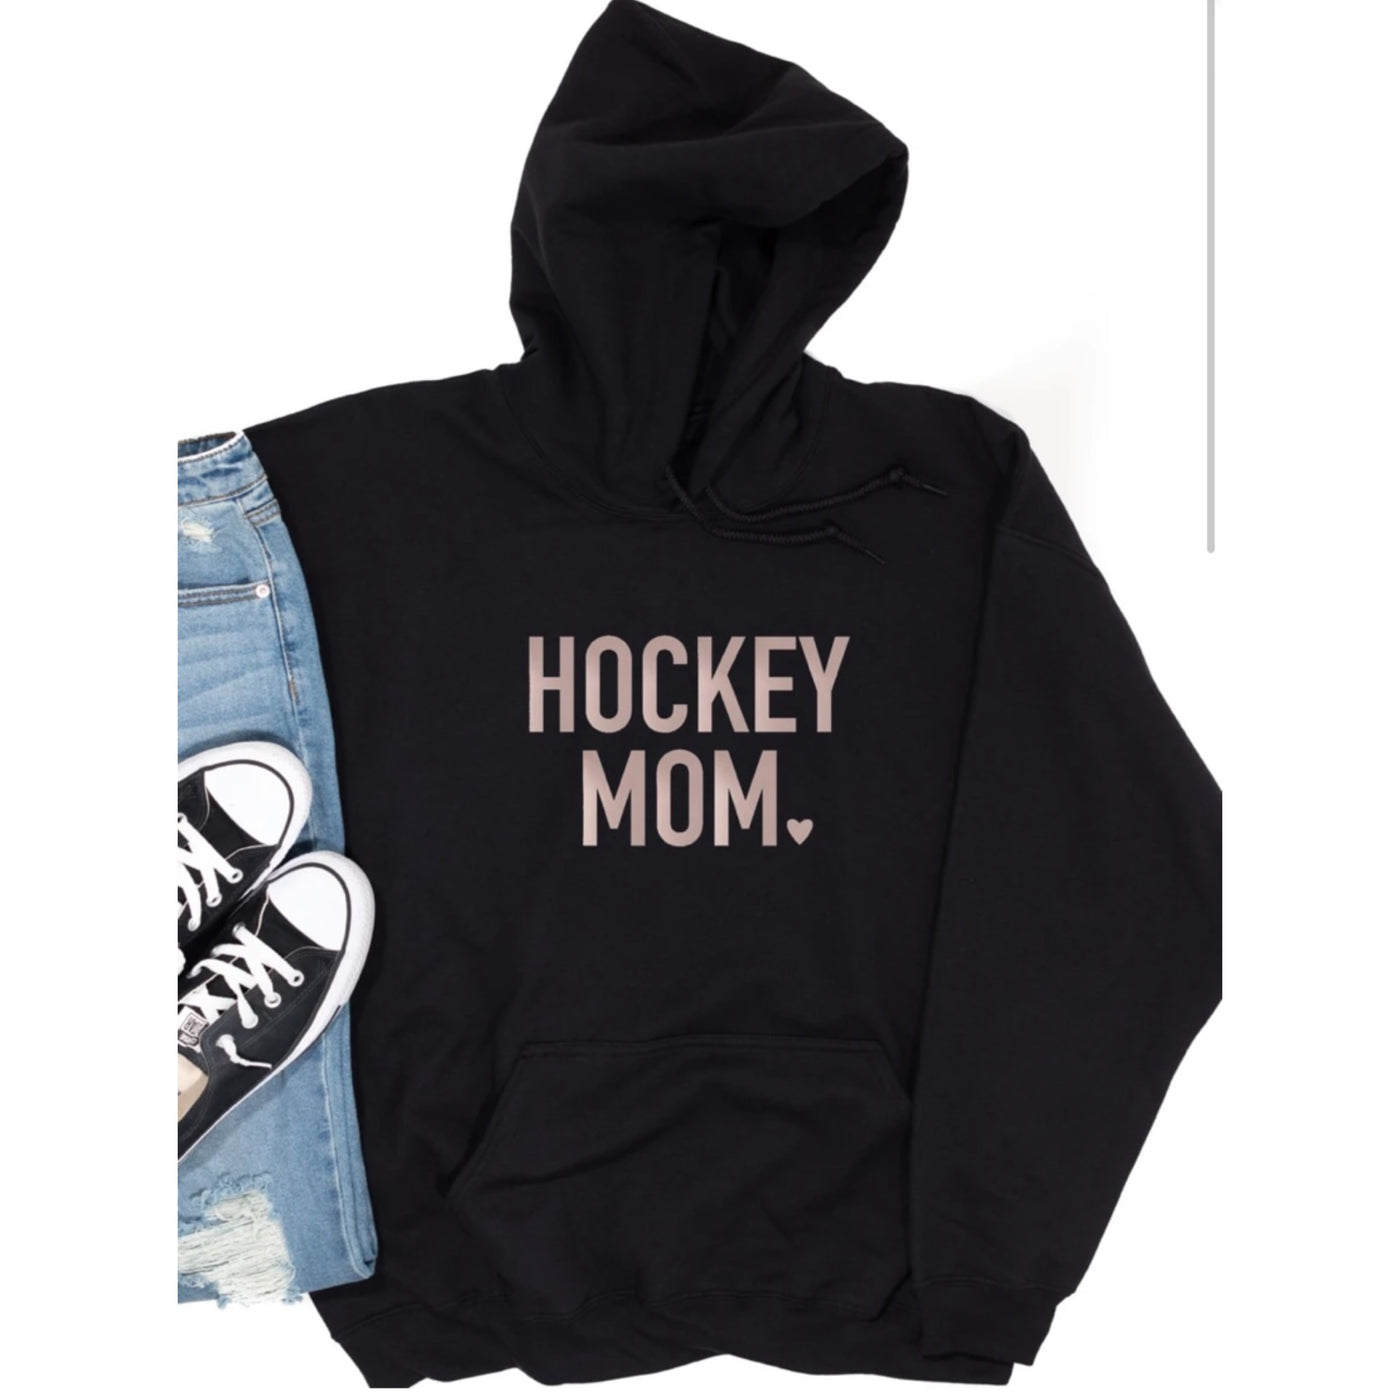 “Hockey Mom” Hoodie with Pockets